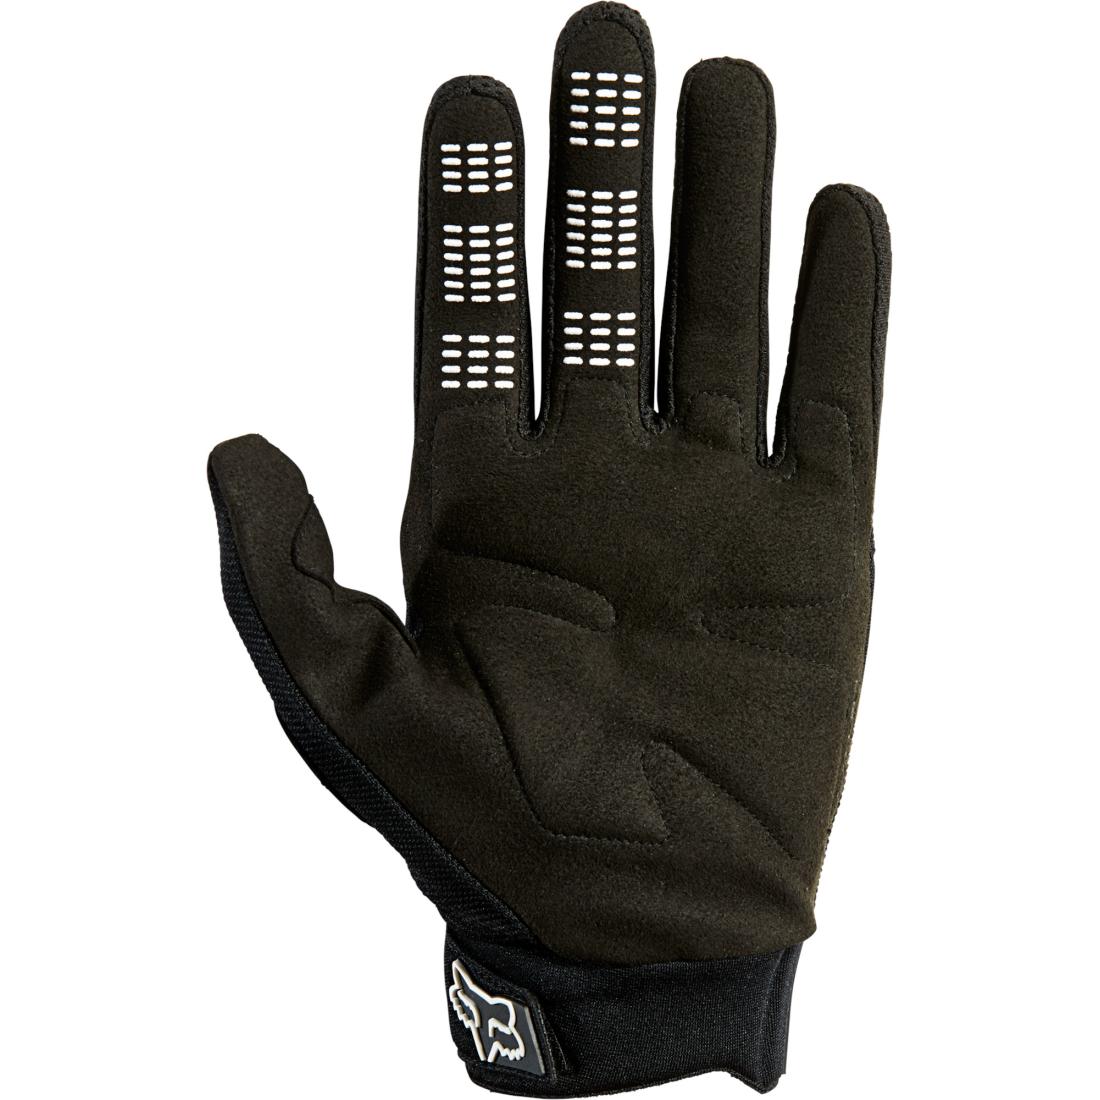 Dirtpaw Glove - Black Blk/Wht